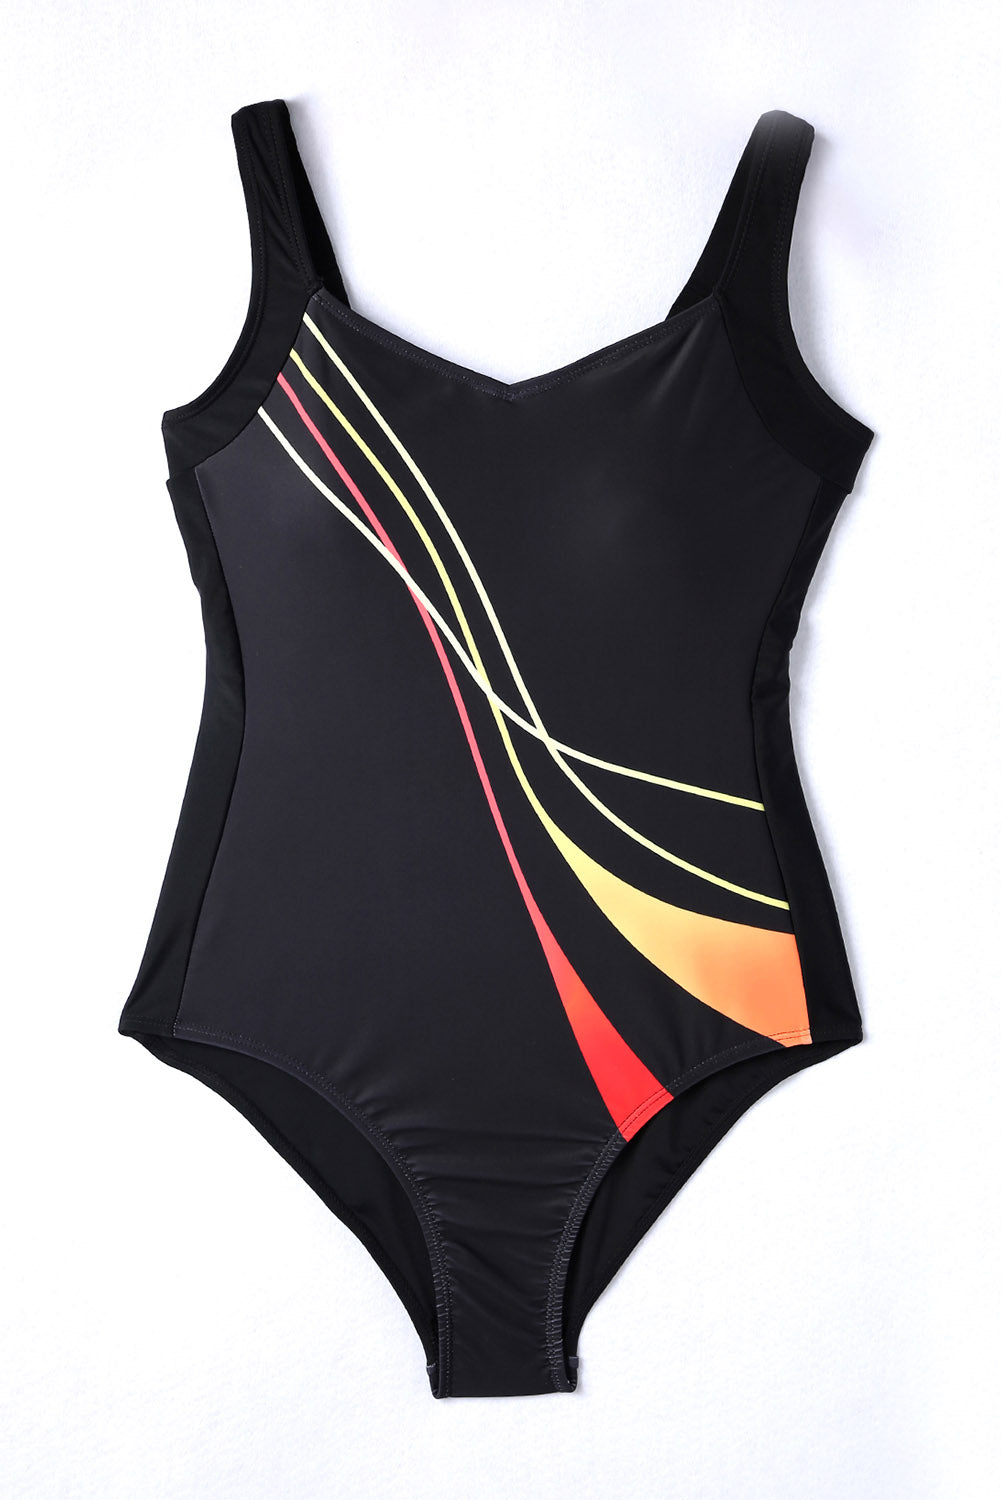 LC443354-2-S, LC443354-2-M, LC443354-2-L, LC443354-2-XL, LC443354-2-2XL, Black Women One Piece Swimsuit Striped Pattern Print Sleeveless Bathing Suit